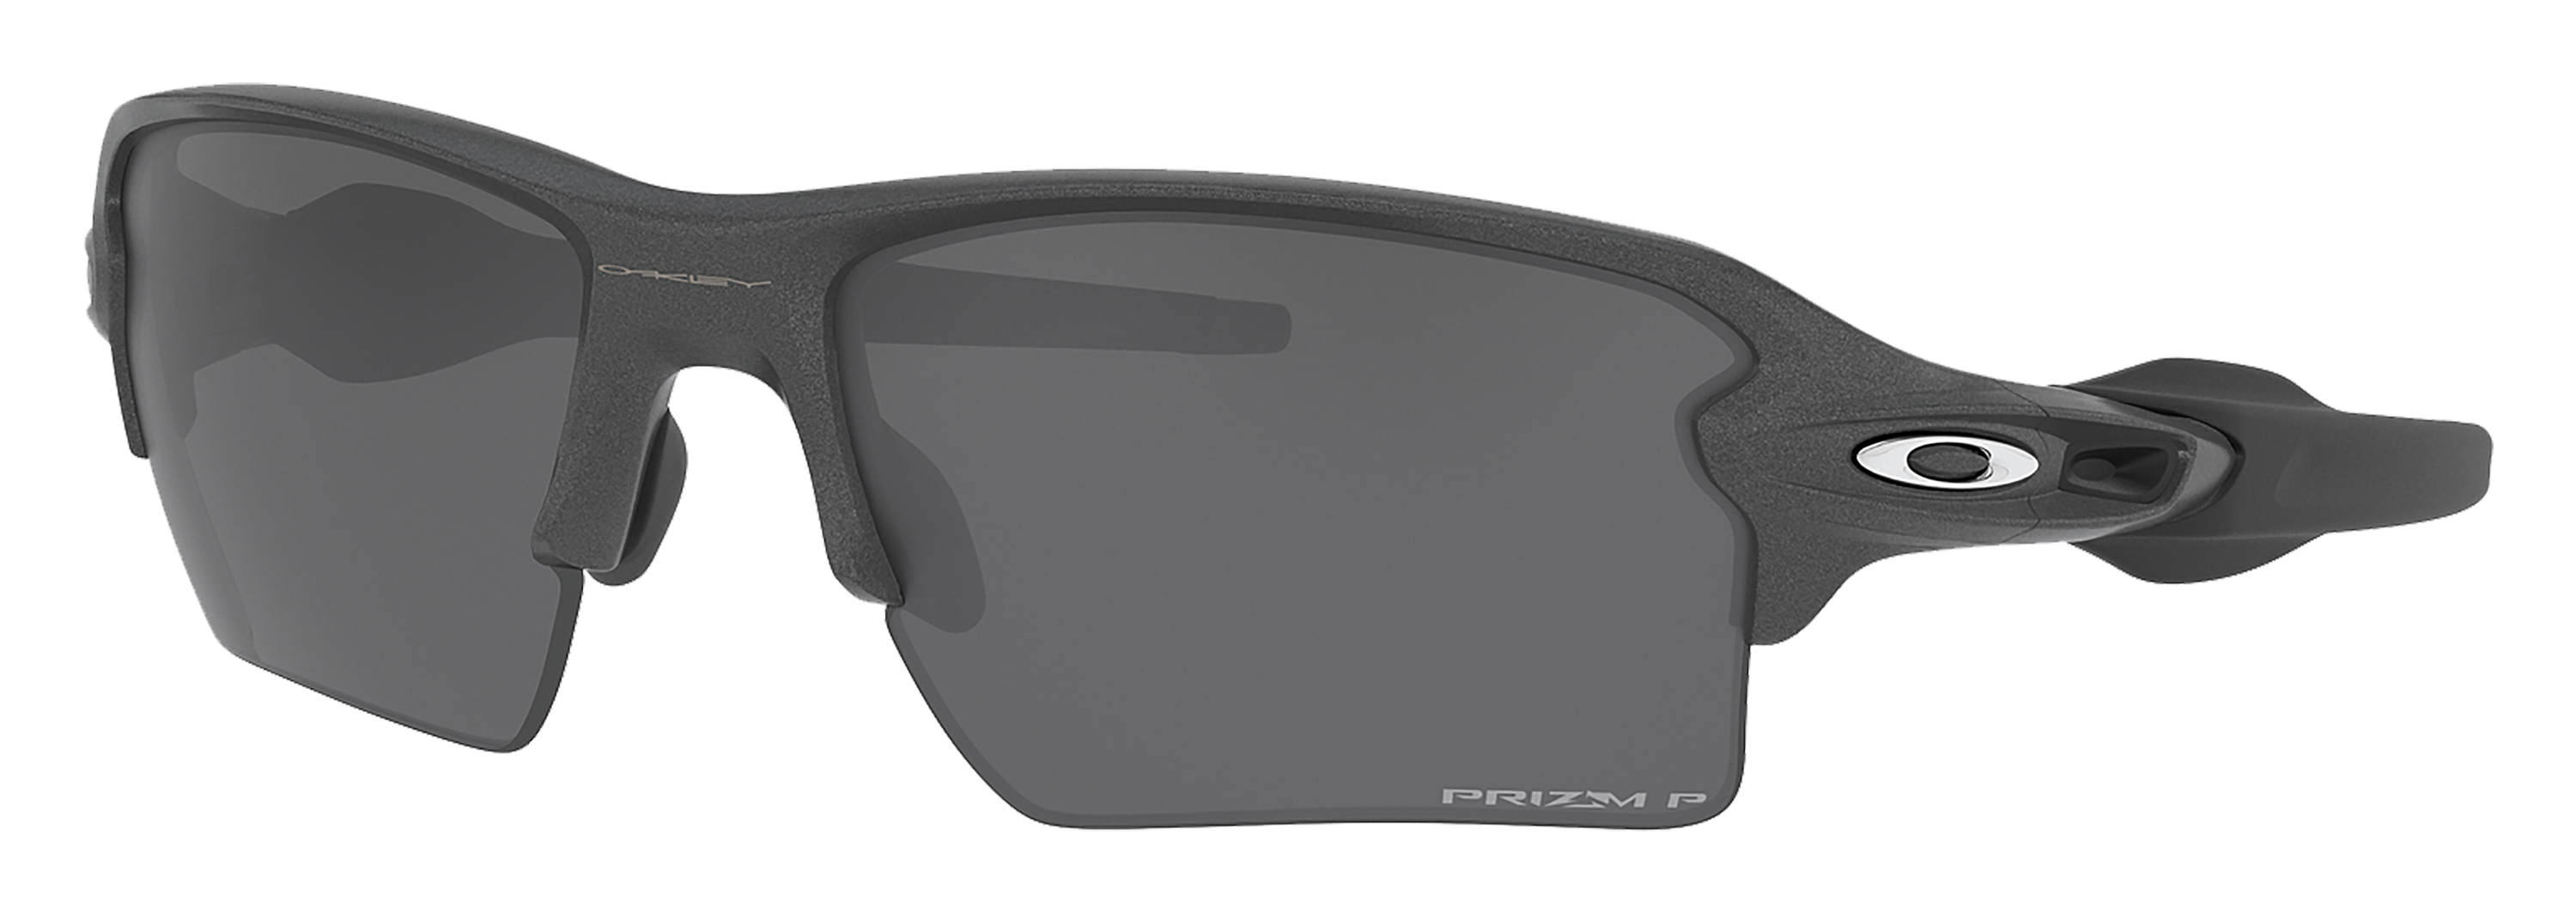 Oakley Flak 2.0 XL OO9188 Prizm Grey Iridium Mirror Polarized Sunglasses